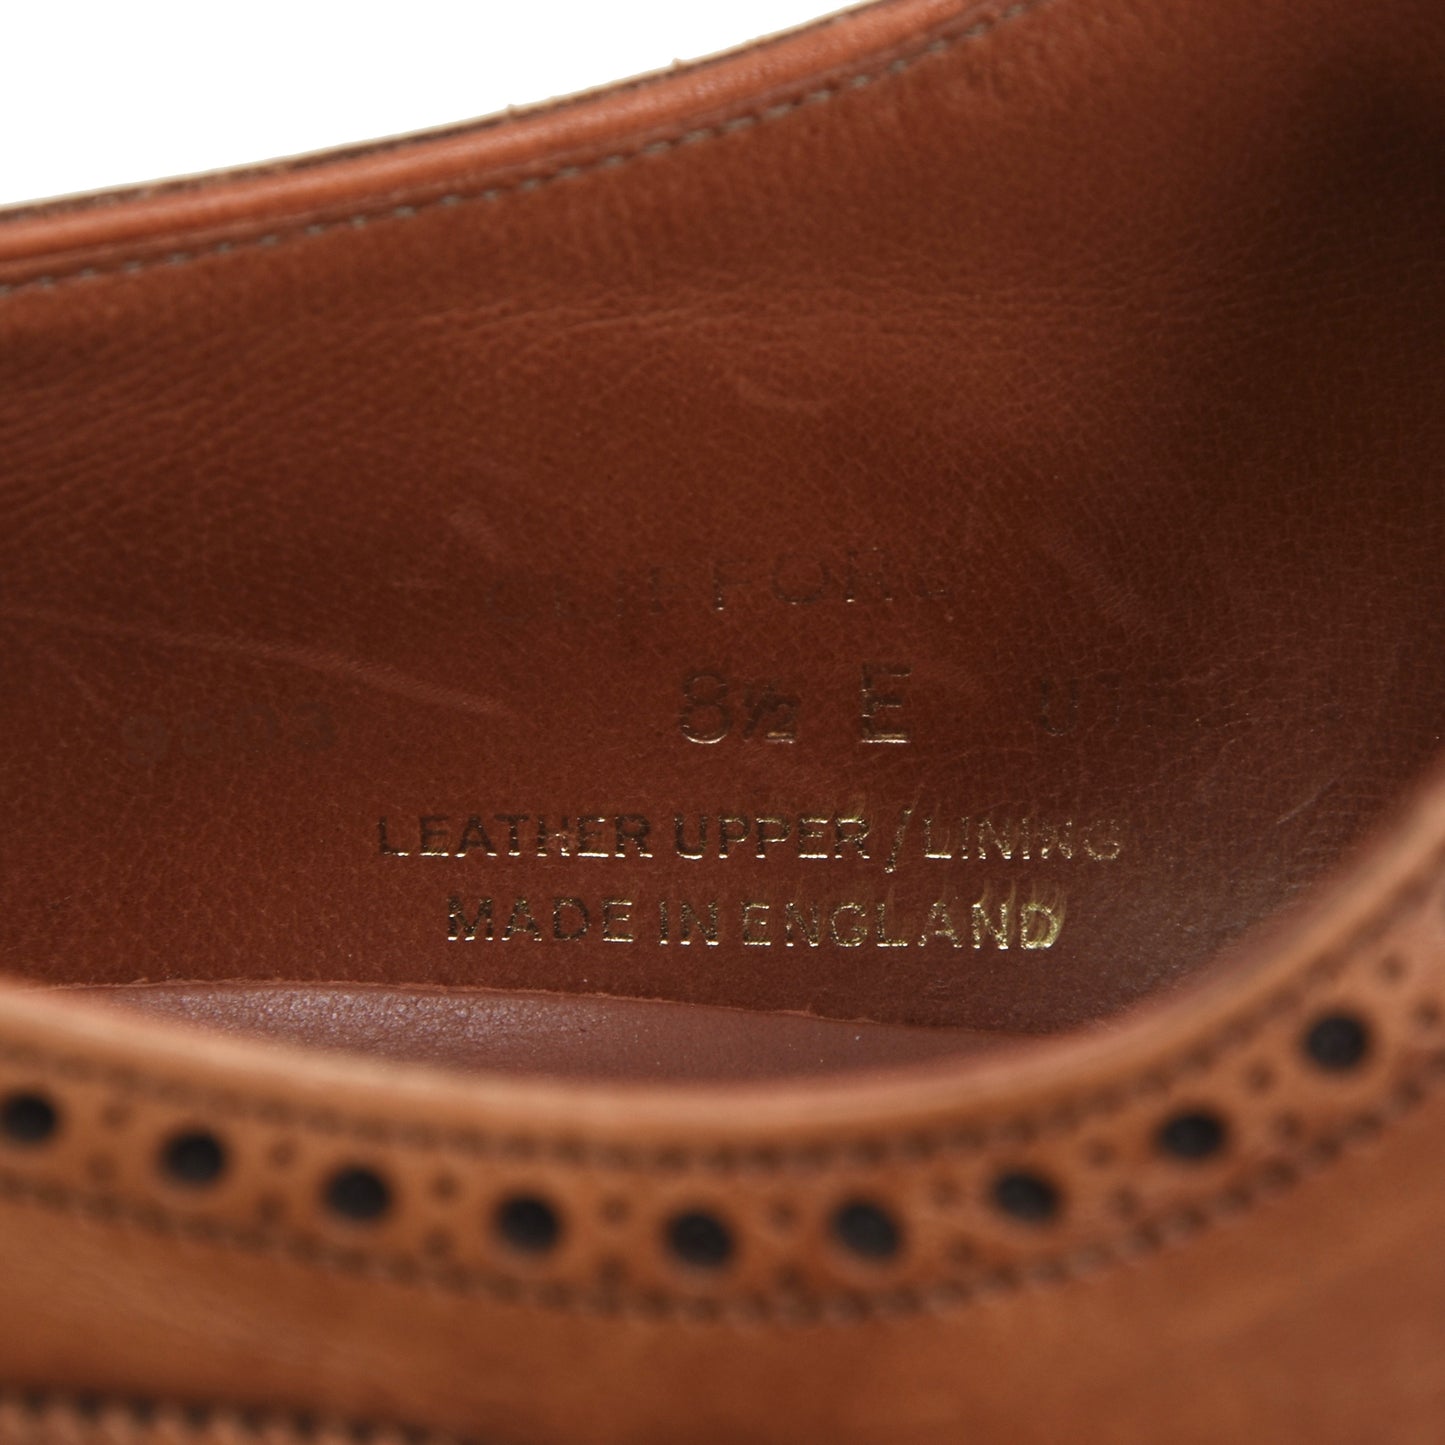 Crockett &amp; Jones Schuhe "Clifford" Größe 8,5 - Braun